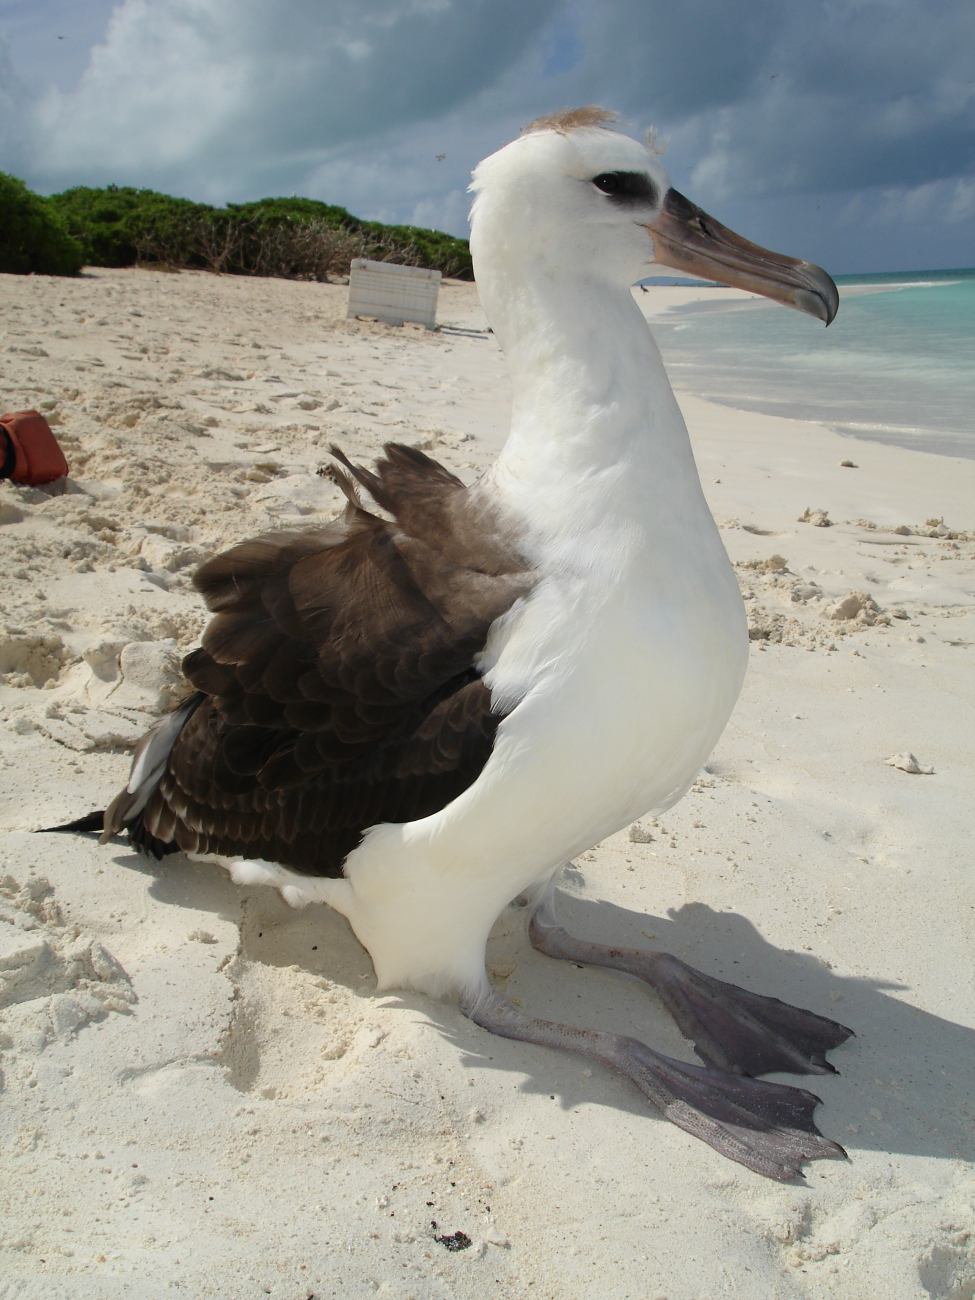 Albatross chick on the beach